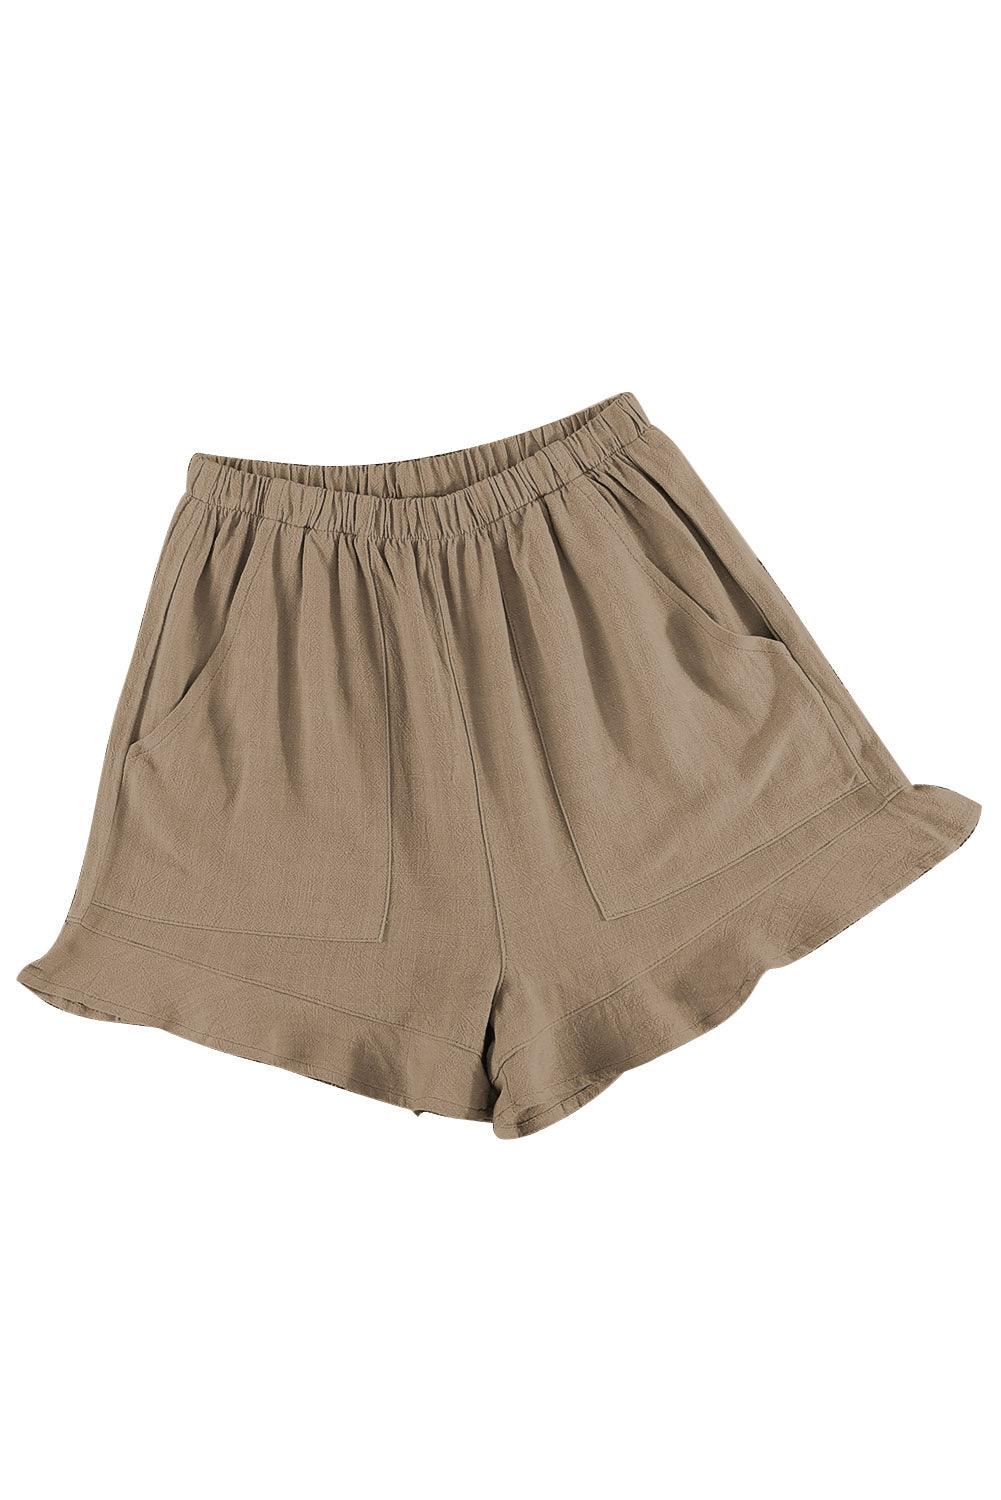 Khaki Casual Pocketed Ruffle High Waist Shorts - Vesteeto